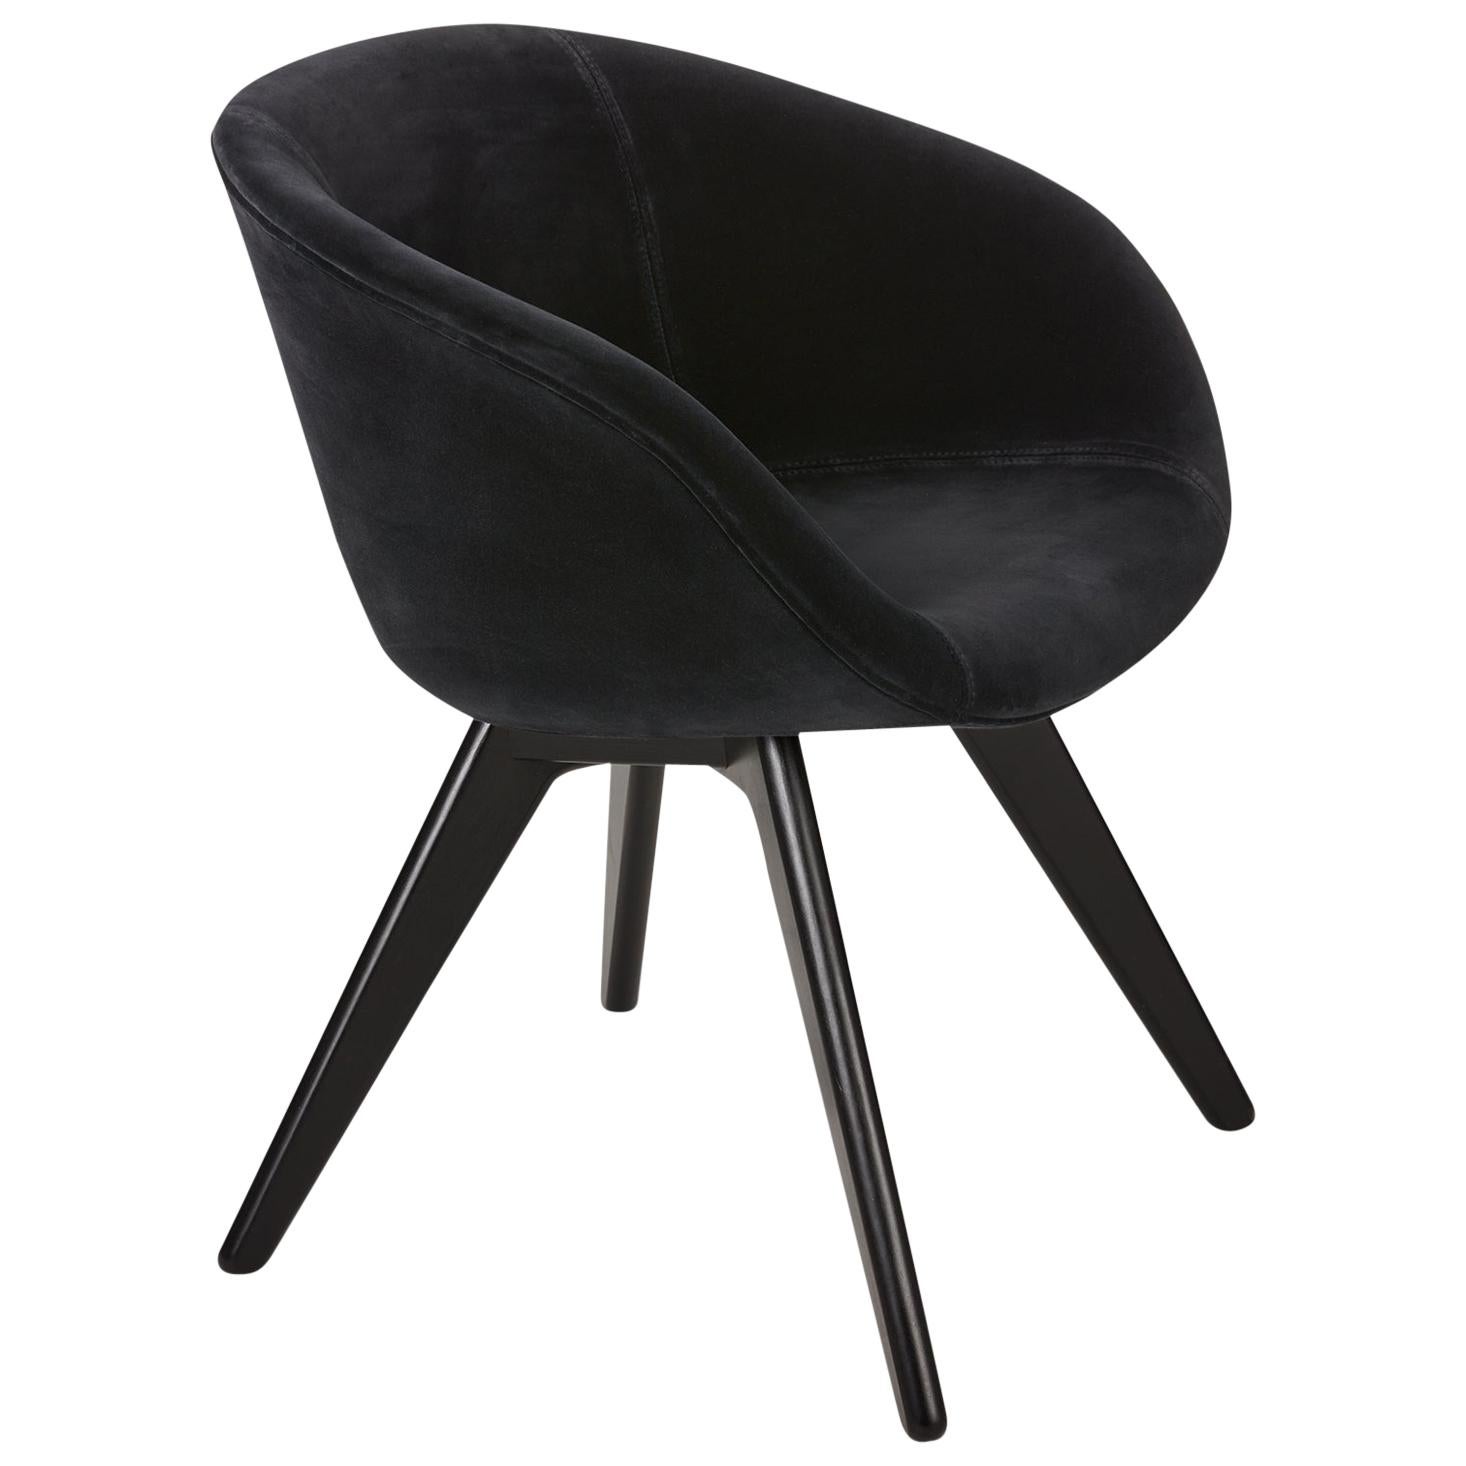 Black (cassia black.jpg) Scoop Low Back Chair with Black Leg by Tom Dixon